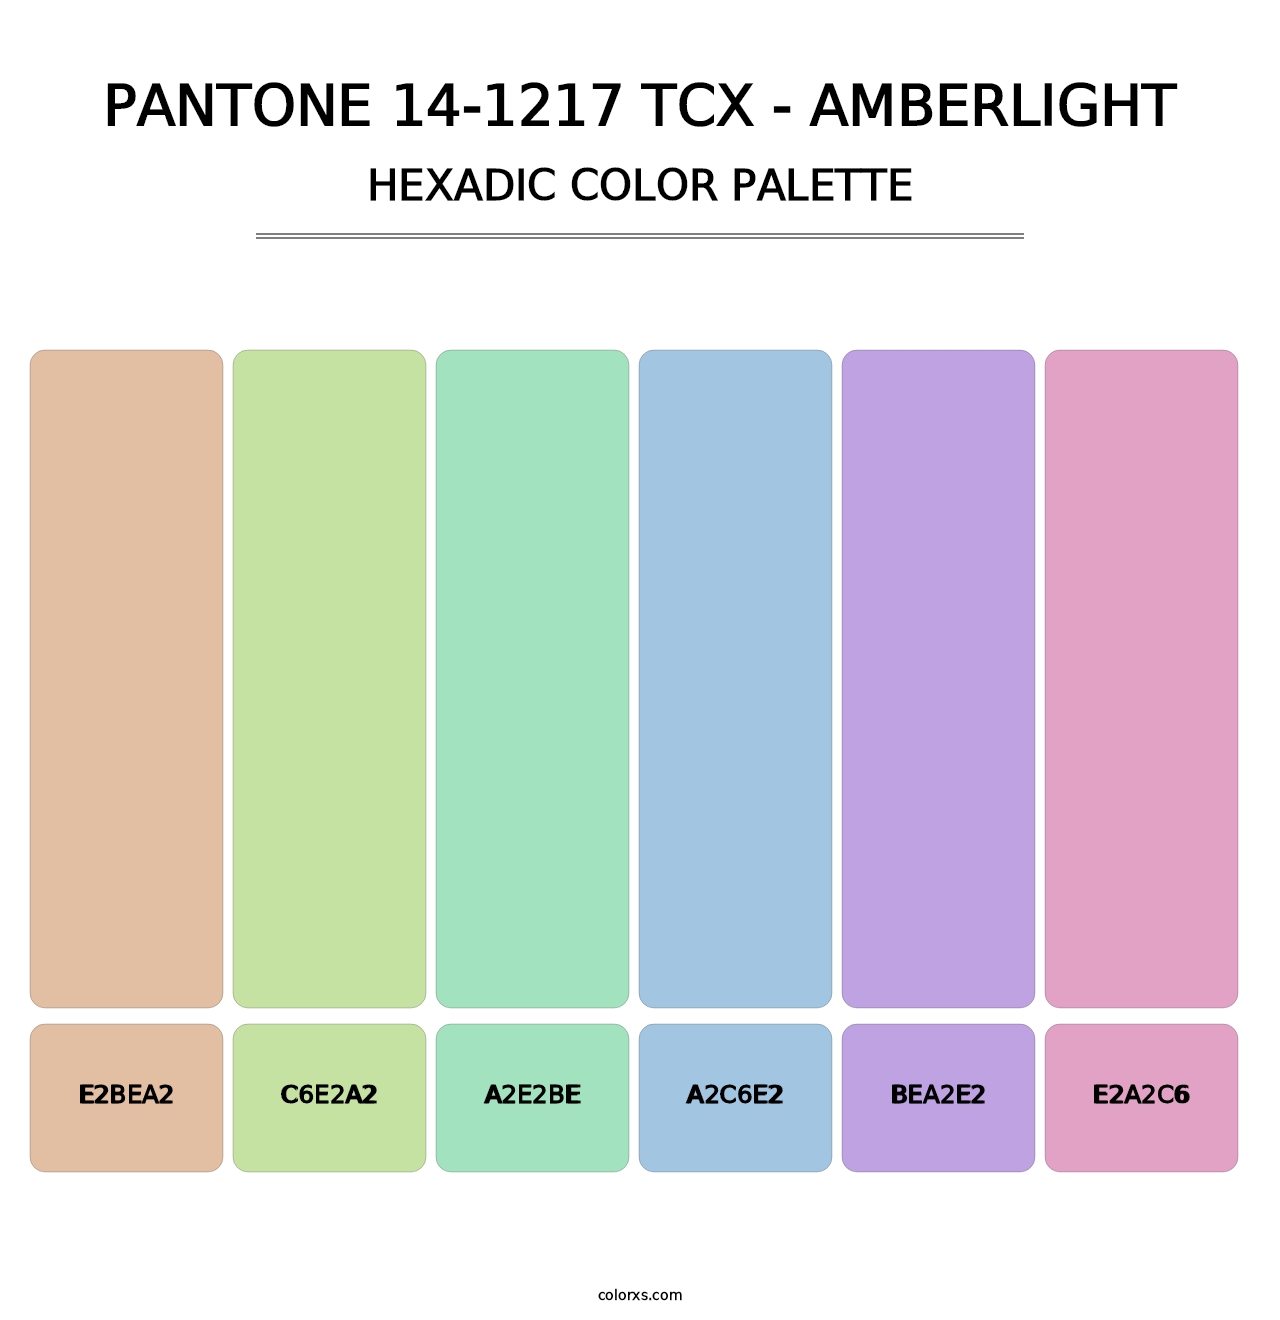 PANTONE 14-1217 TCX - Amberlight - Hexadic Color Palette